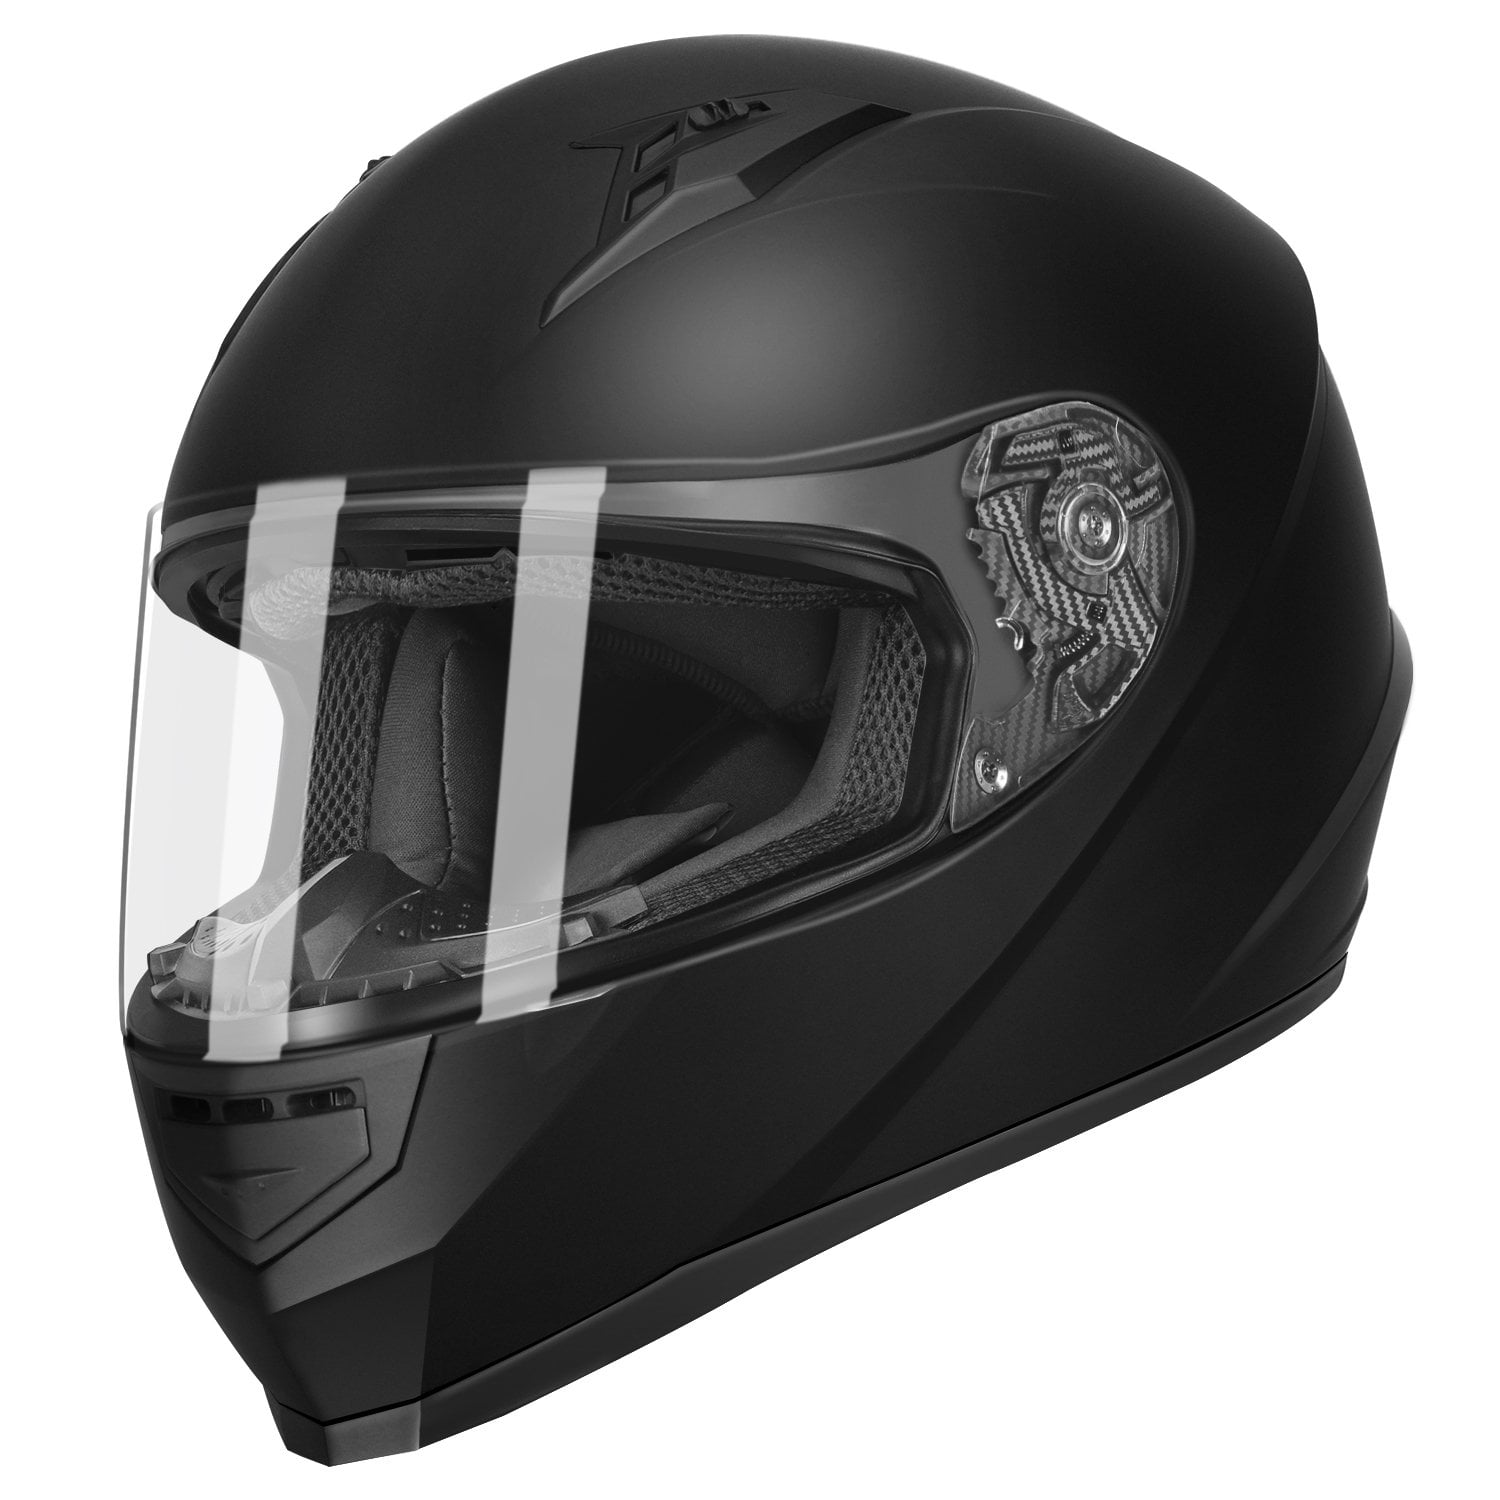 GLX GX11 Compact Lightweight Full Face Motorcycle Street Bike Helmet